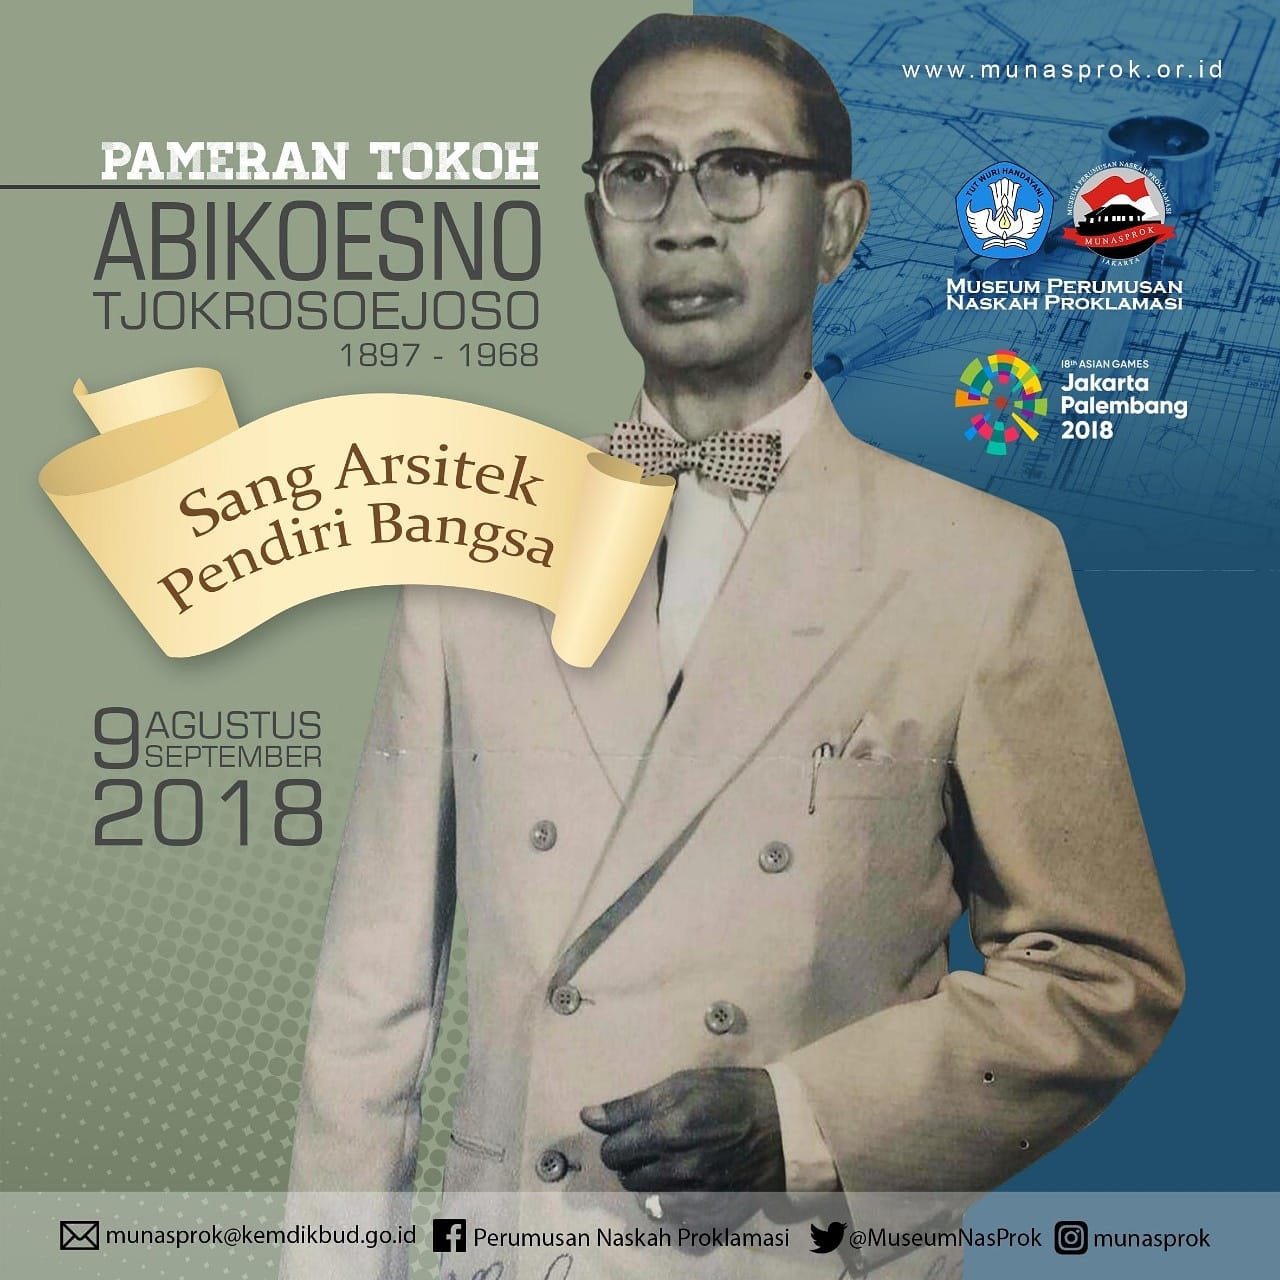 You are currently viewing Pameran R.M. Abikoesno Tjokrosoejoso “Sang Arsitek Pendiri Bangsa”